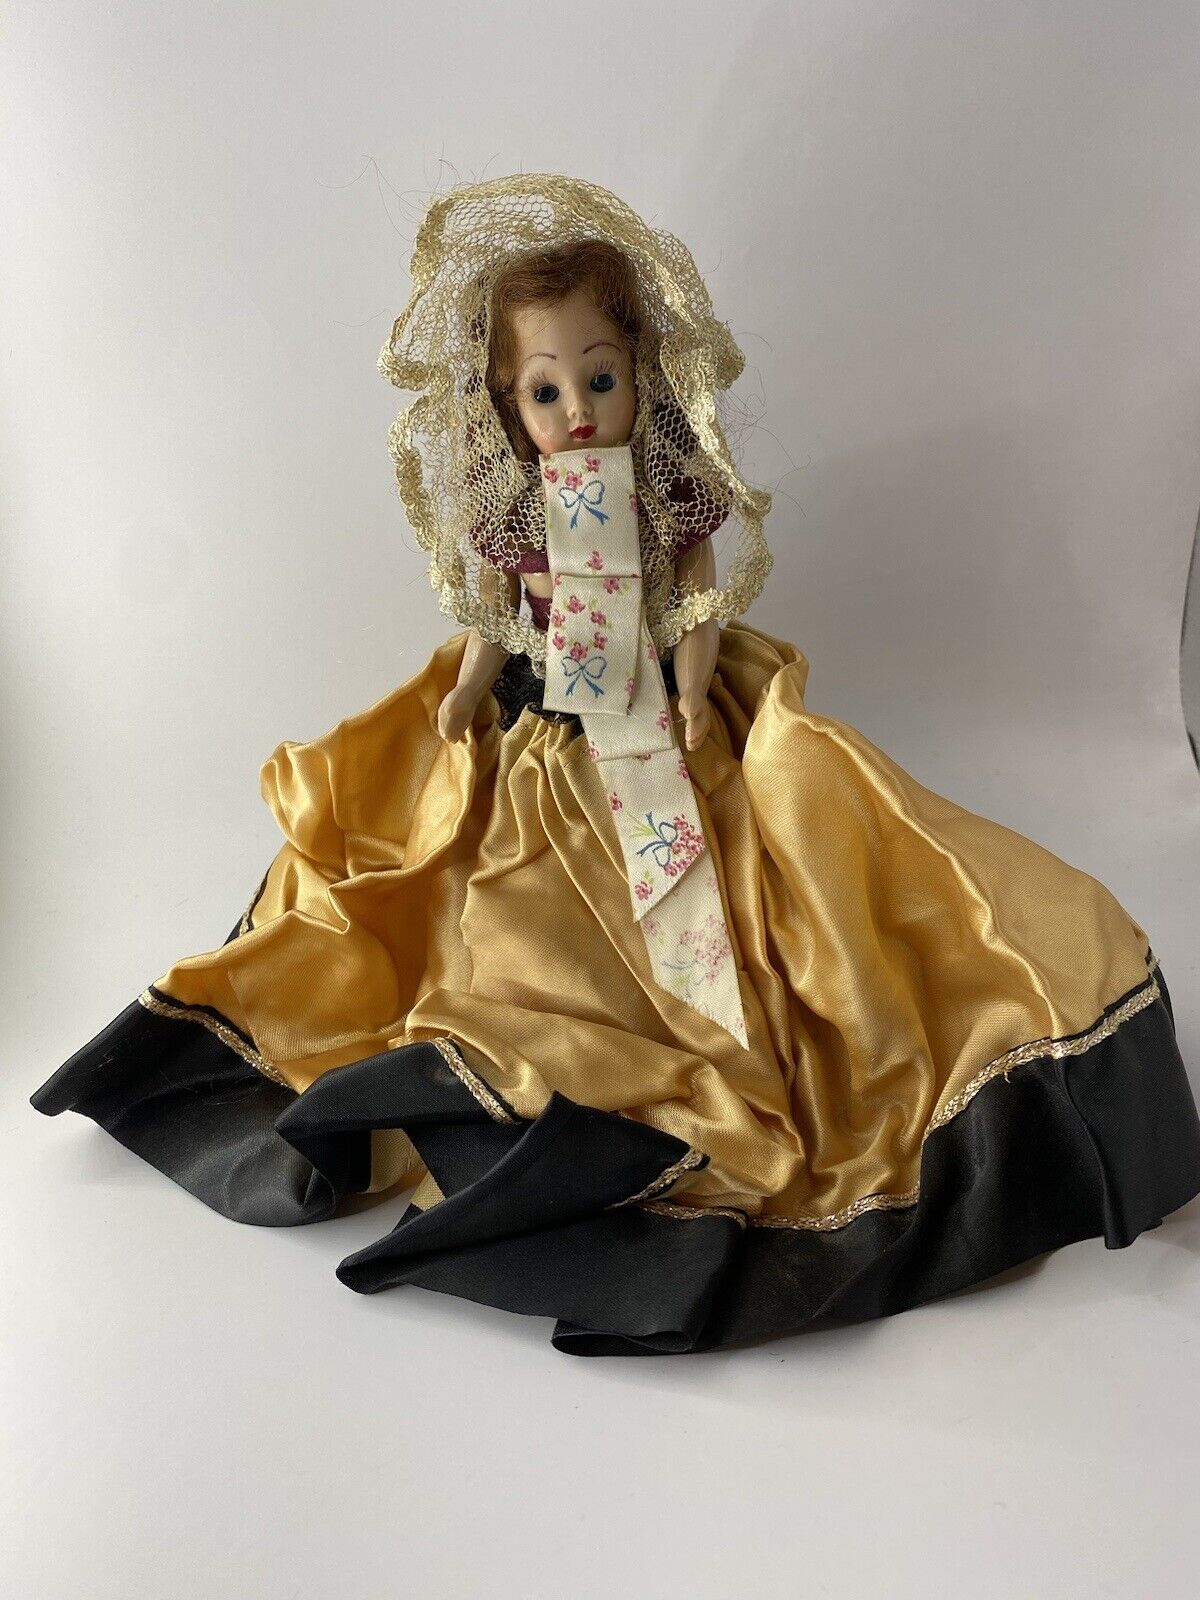 Vintage 1950s Hard Plastic Virga Doll Dress With Lace 7” Red Hair Sleepy Eyes